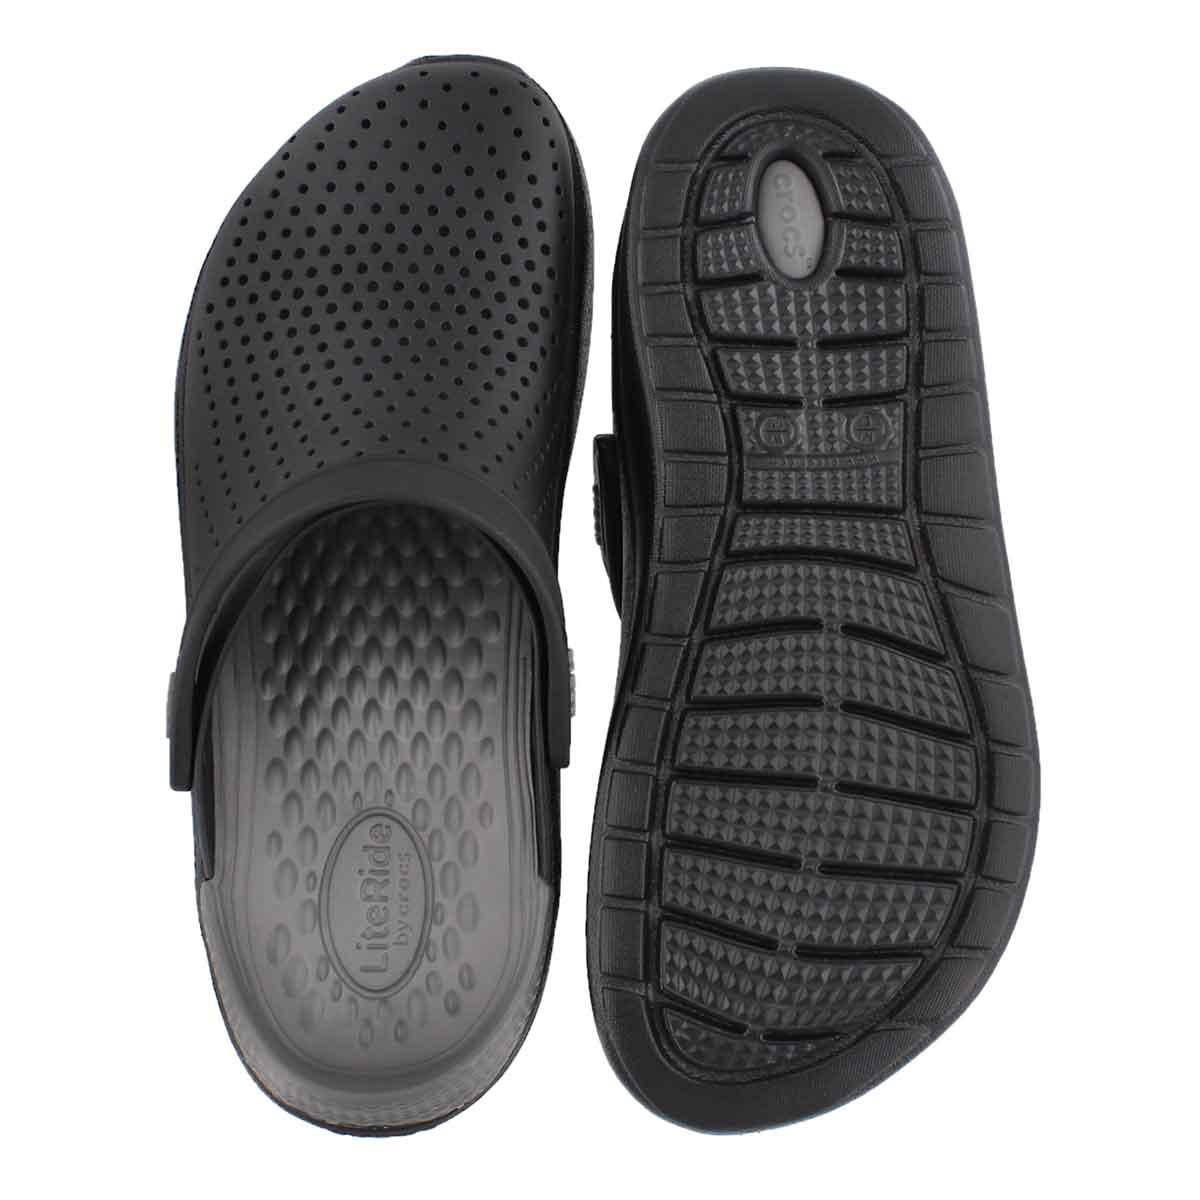 Crocs literide Lite Ride Relaxed Fit Clog Shoes Sandals Black 204592-0 ...